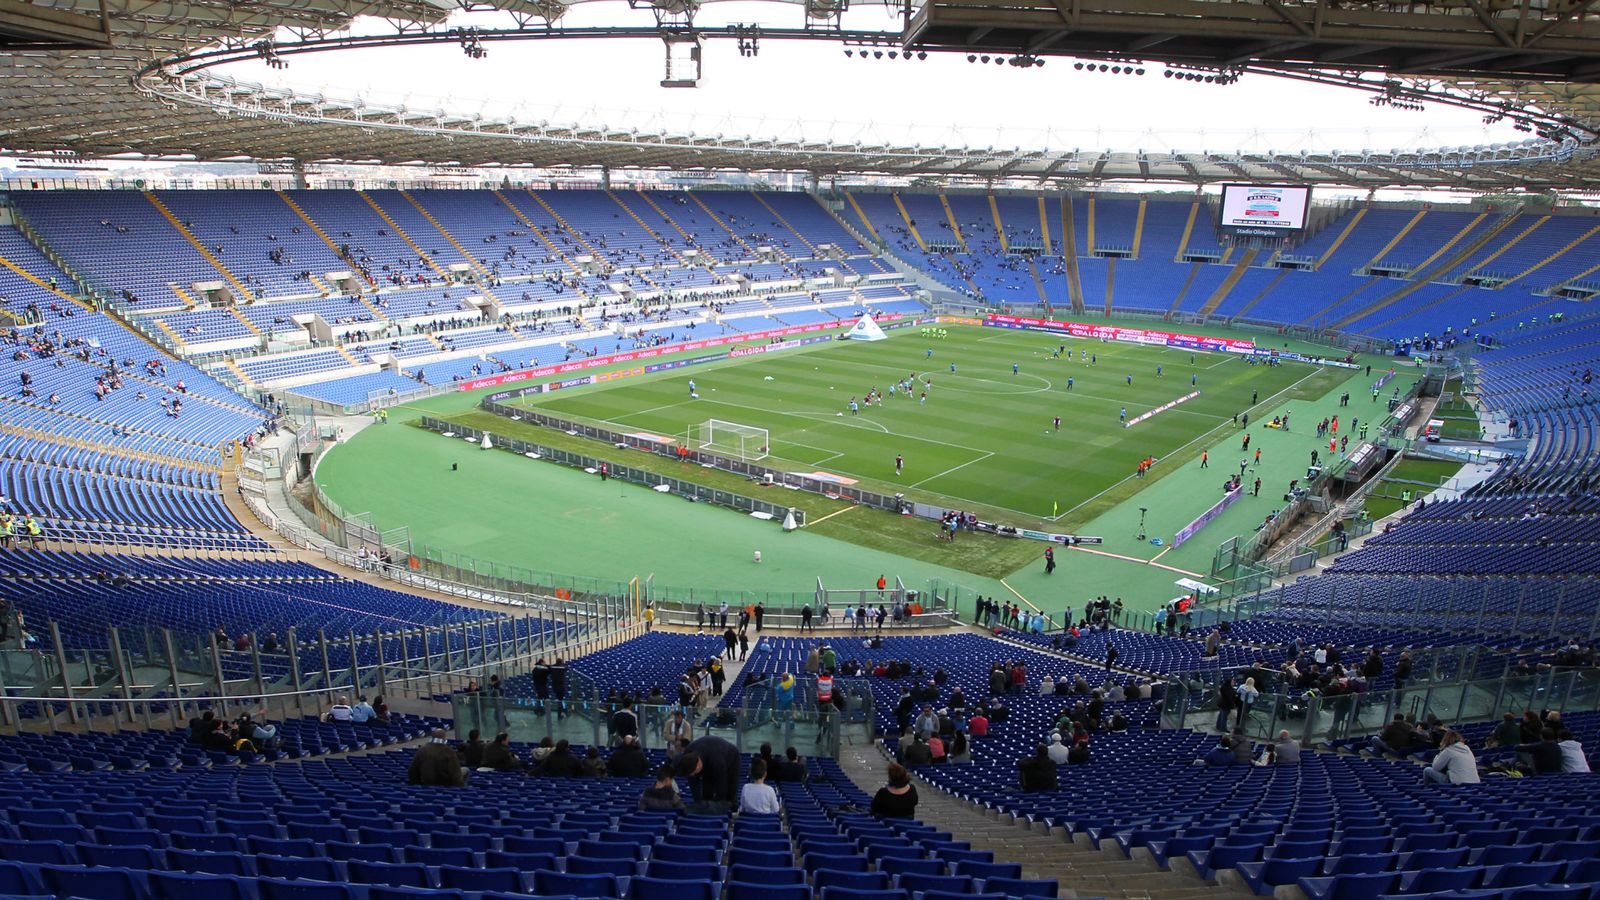 International: Stadio Olimpico chosen by Italian Football Federation for Euro 2020 bid | Football News | Sky Sports